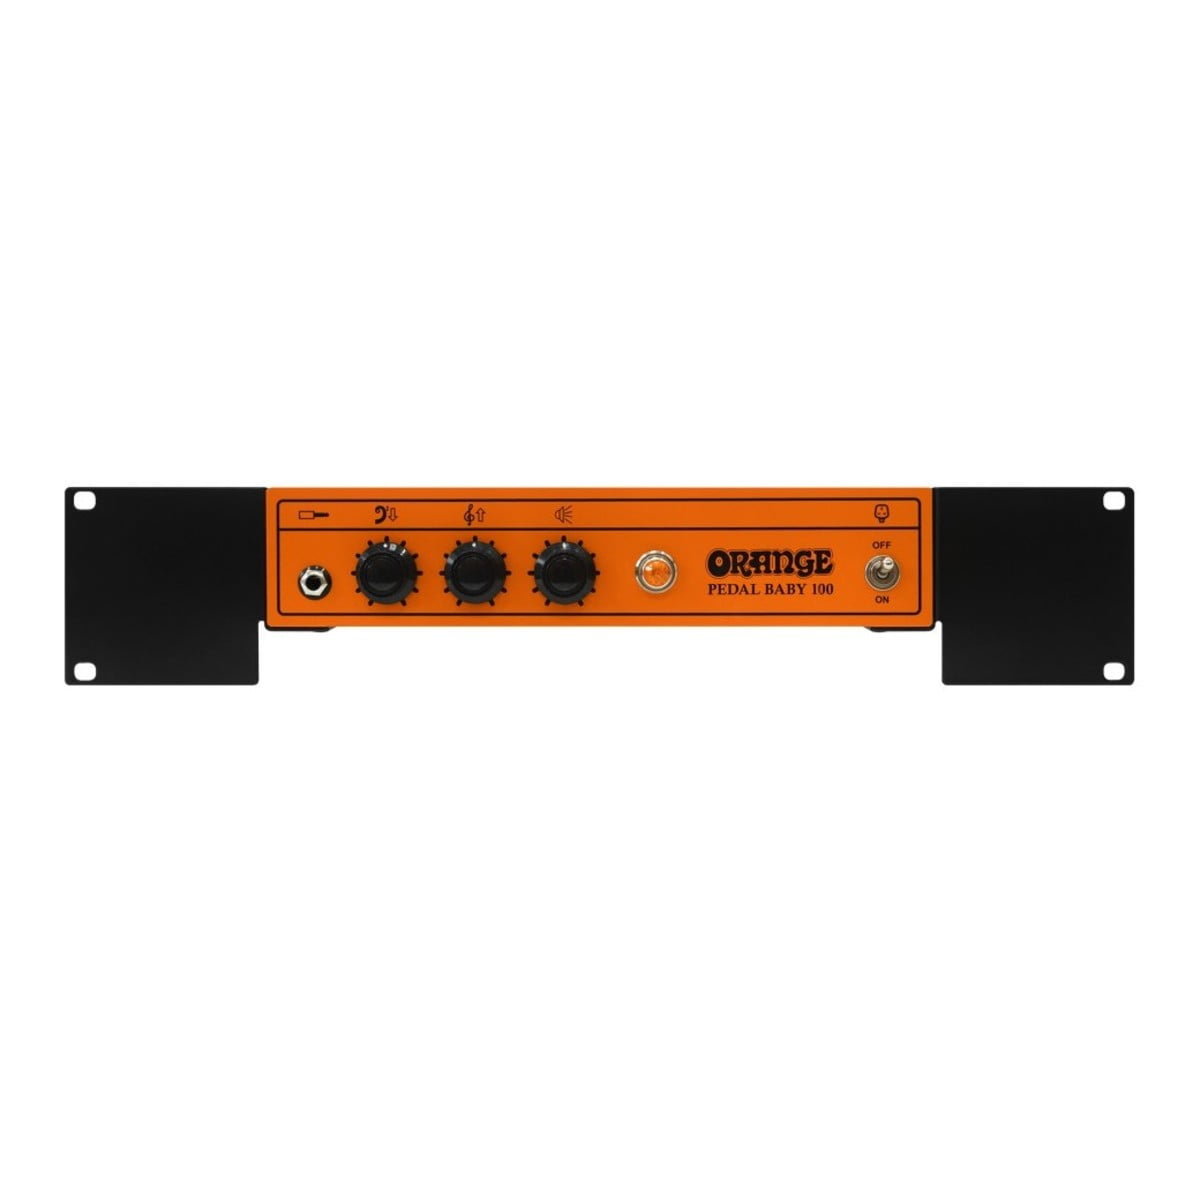 Orange Pedal Baby Rack Mount Kit - New Orange Amps                   Guitar Effect Pedal